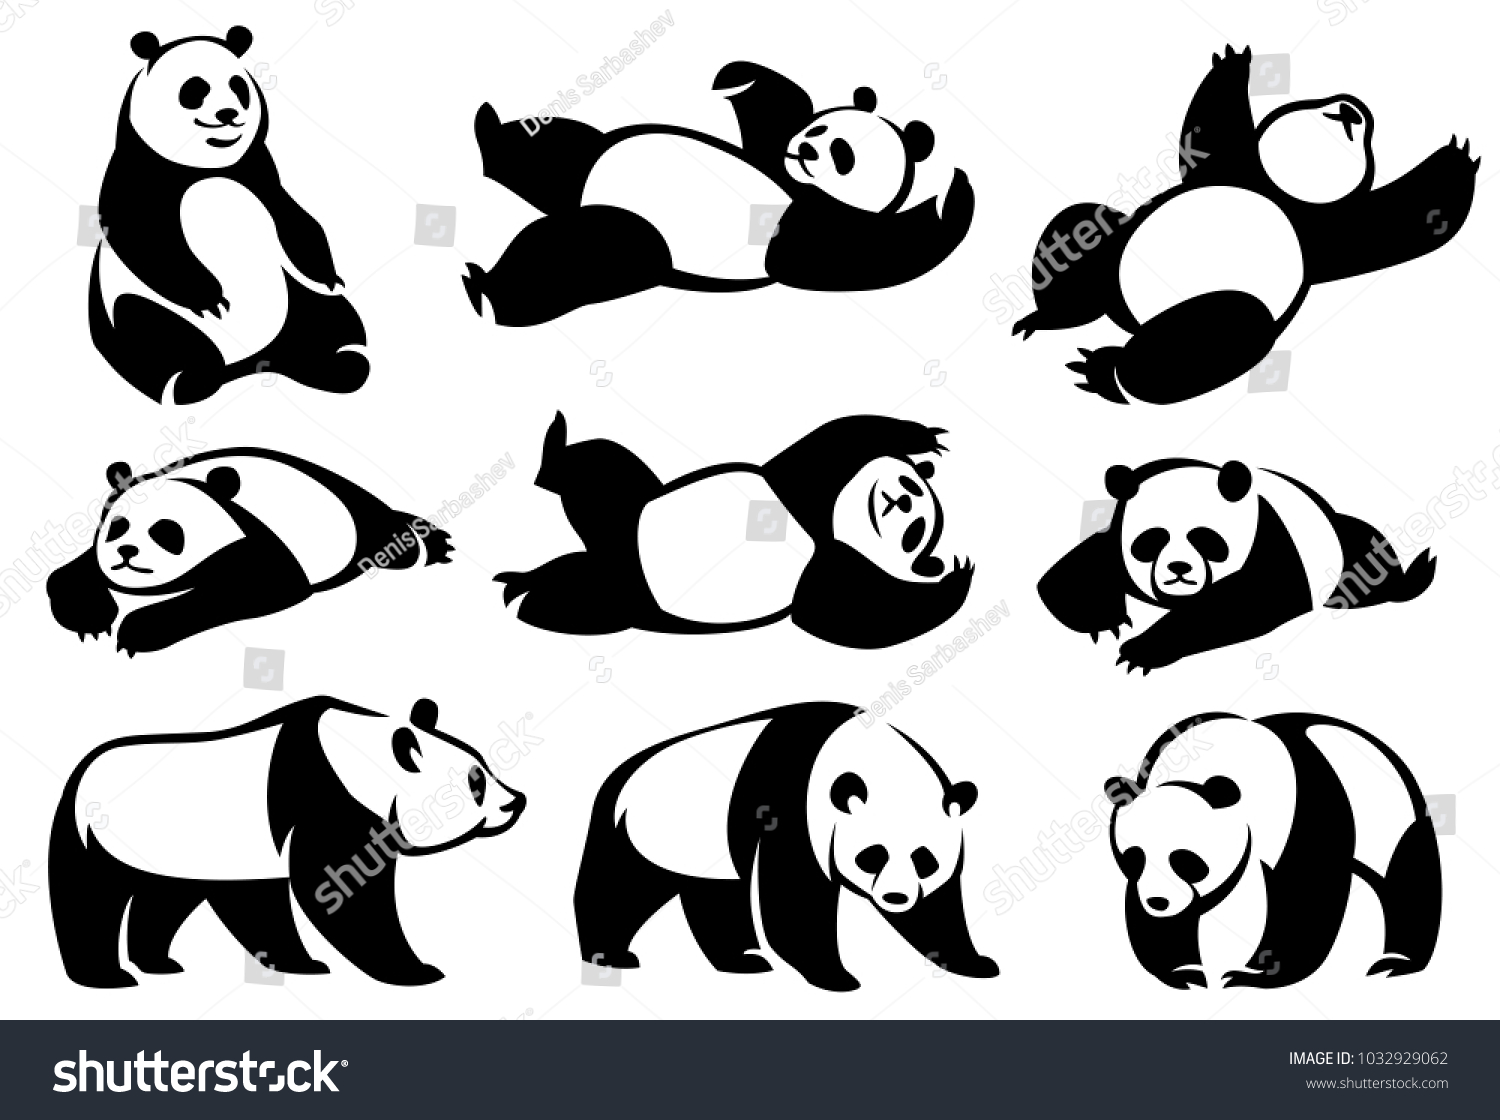 SVG of Set of decorative illustrations pandas. svg